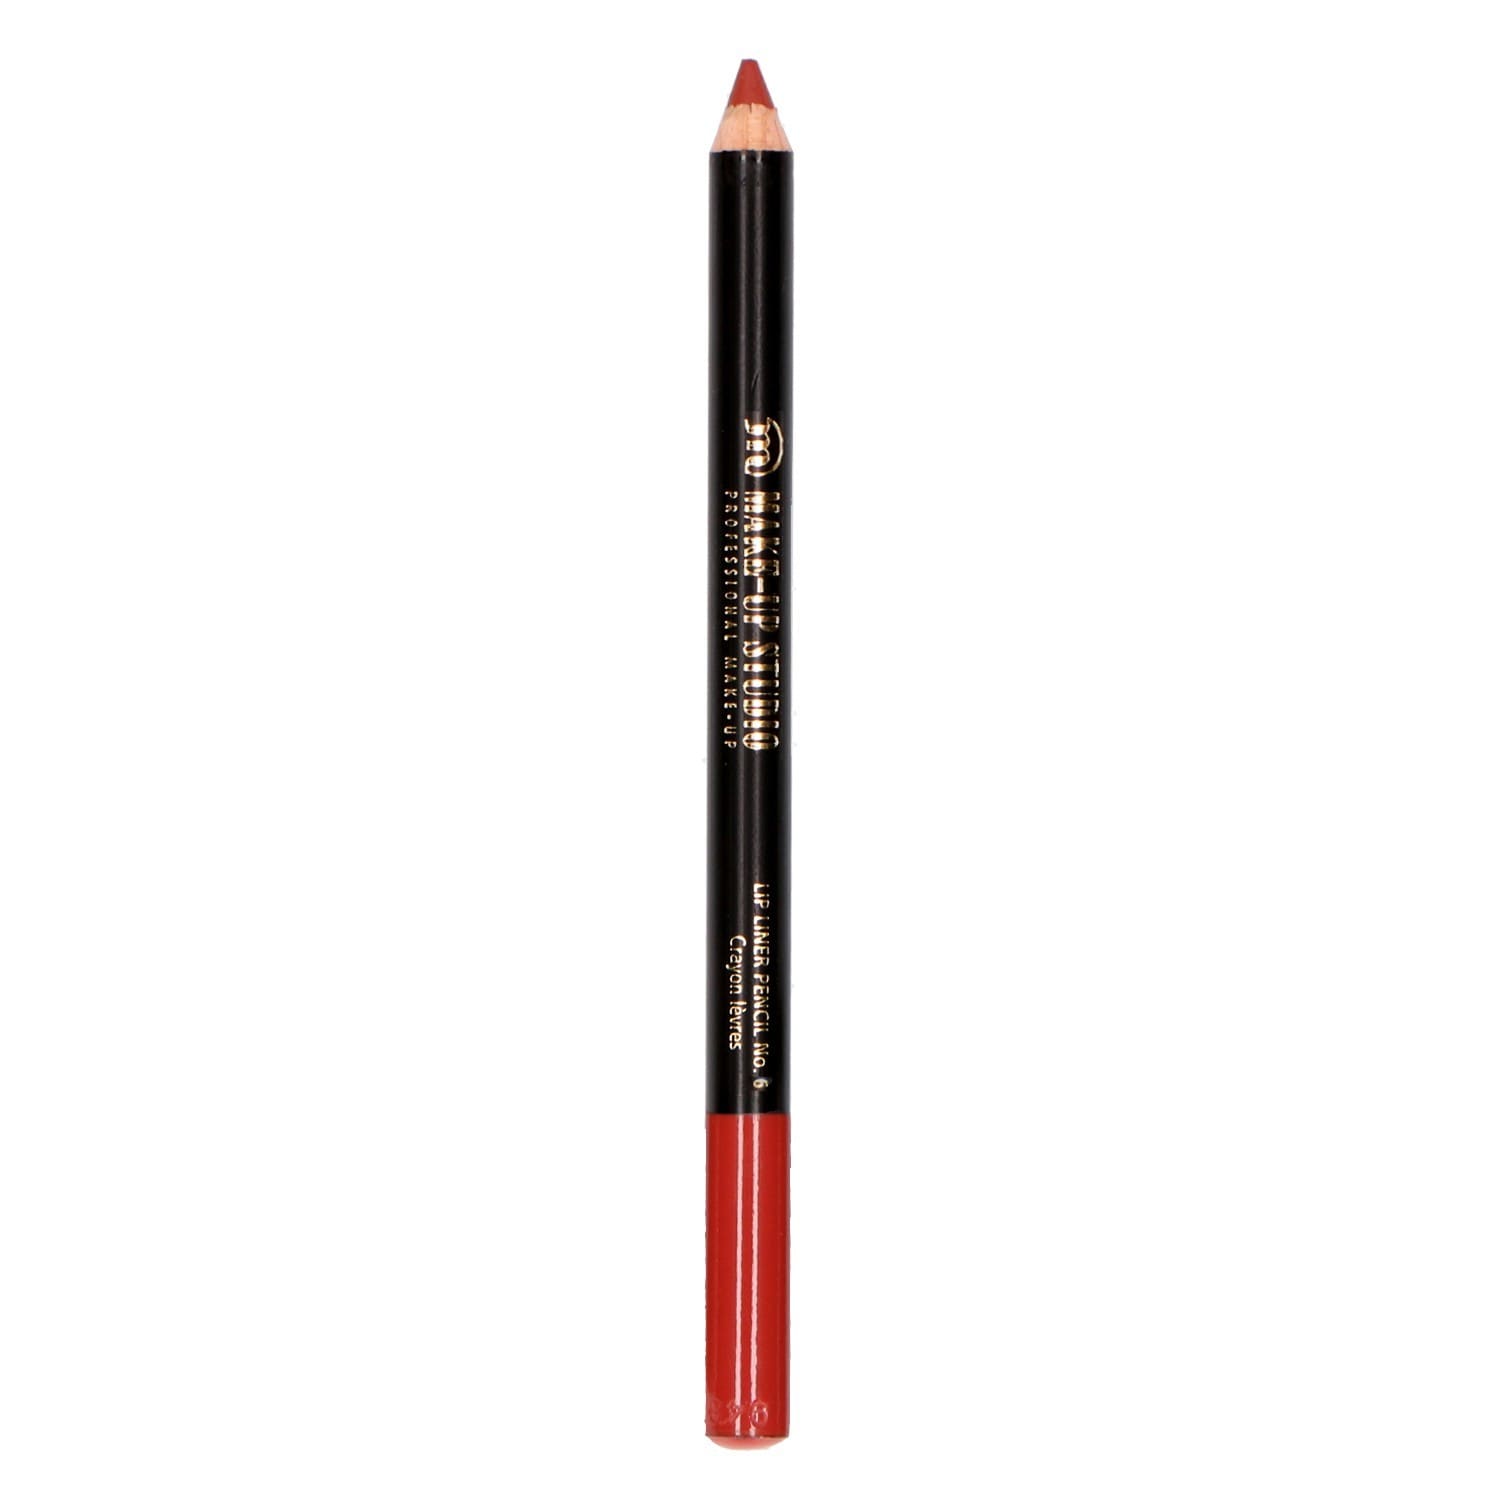 Make-up Studio Lip Liner Pencil, 6